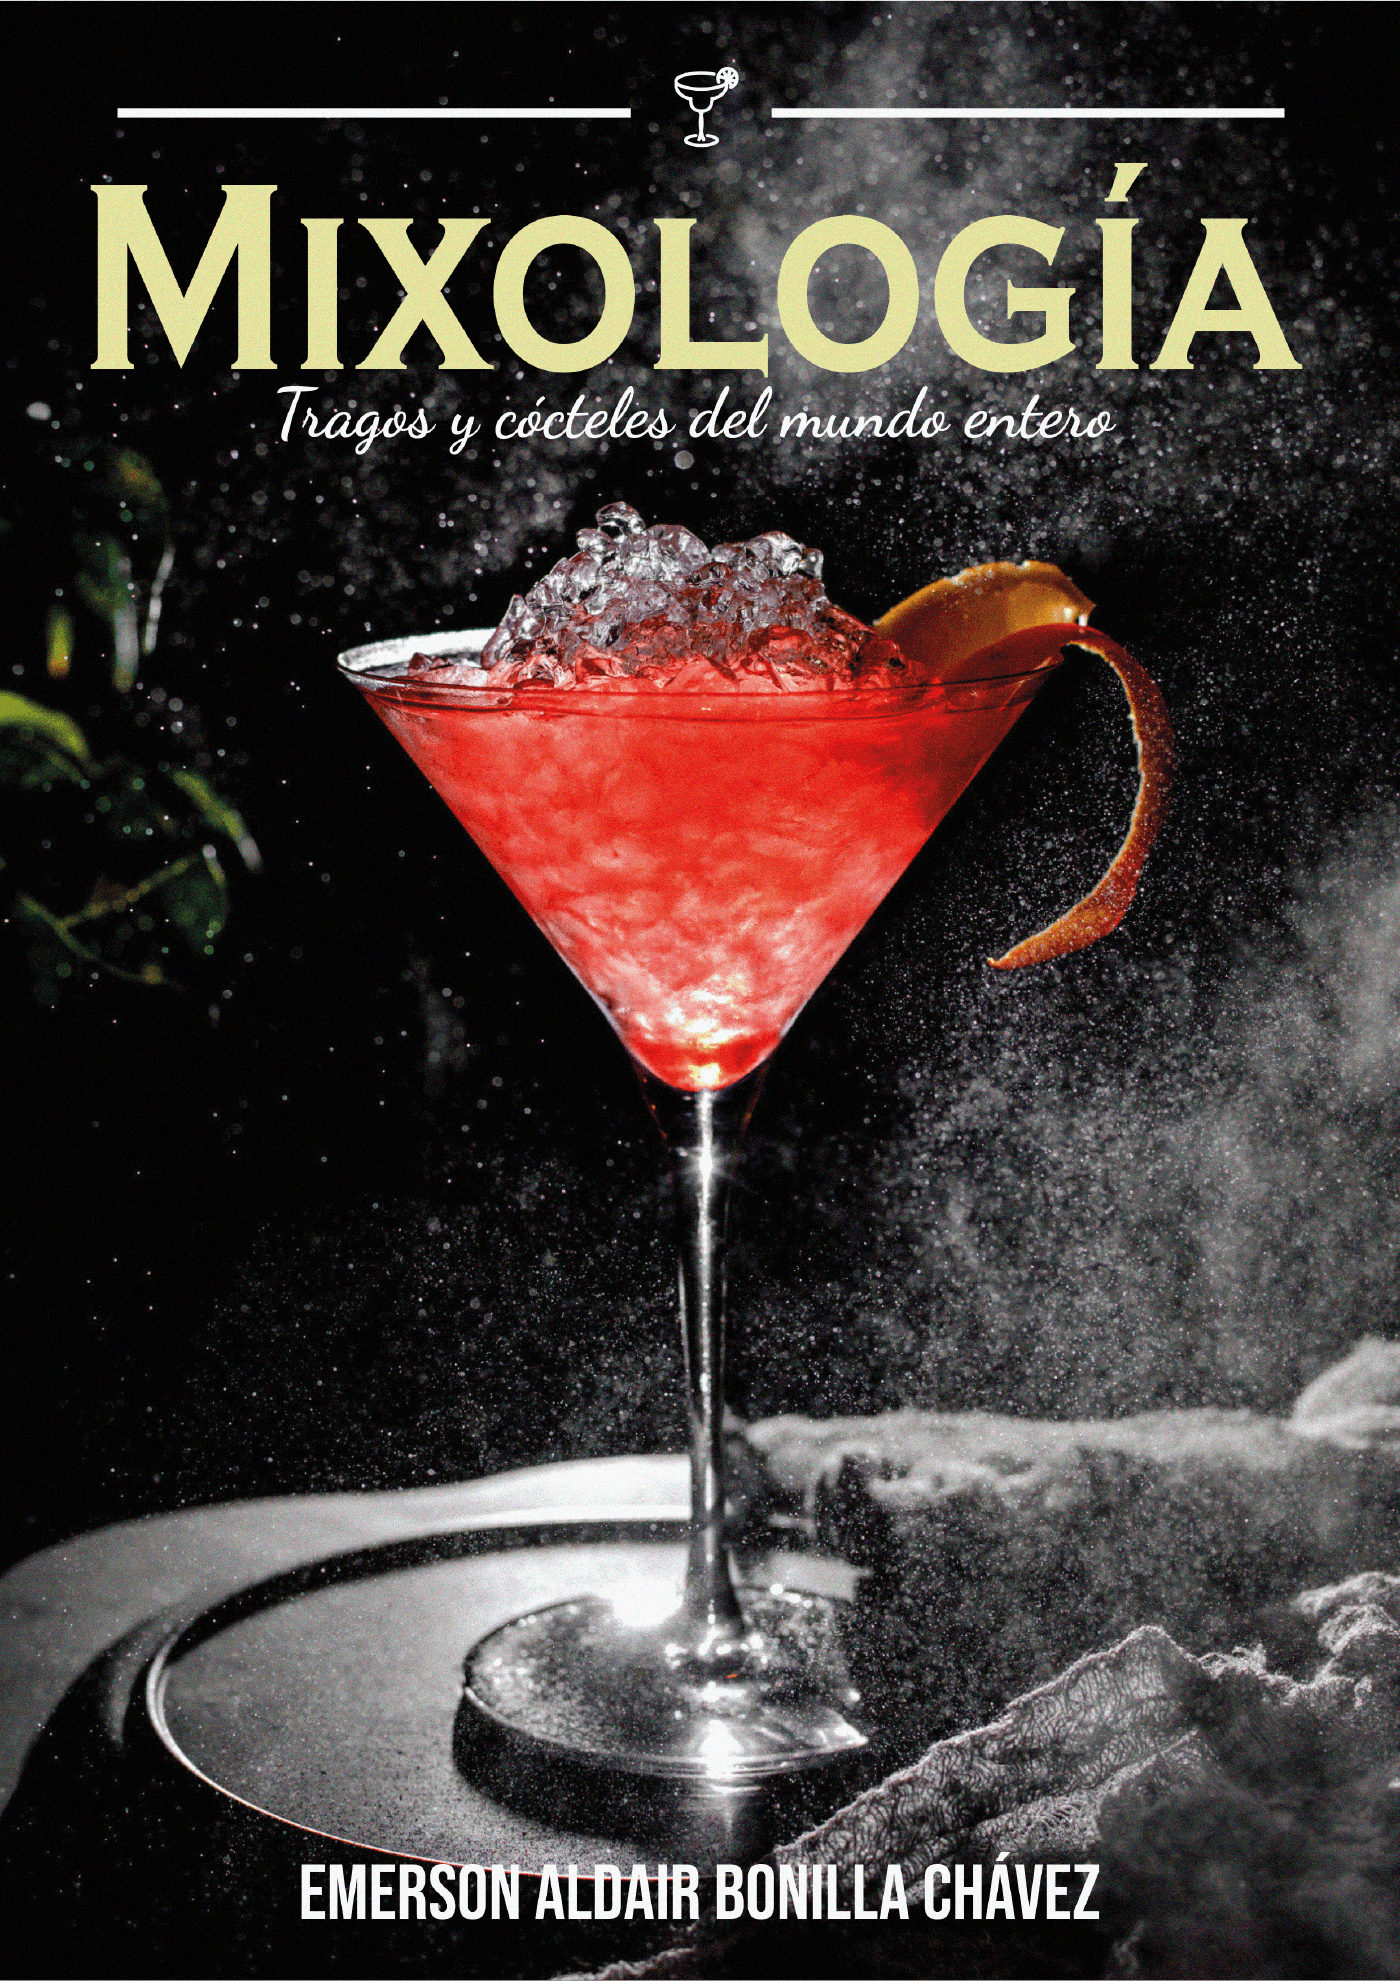 editorial InDesign magazine typography   adobe illustrator editorial design  book cover cocktail cocteleria bar